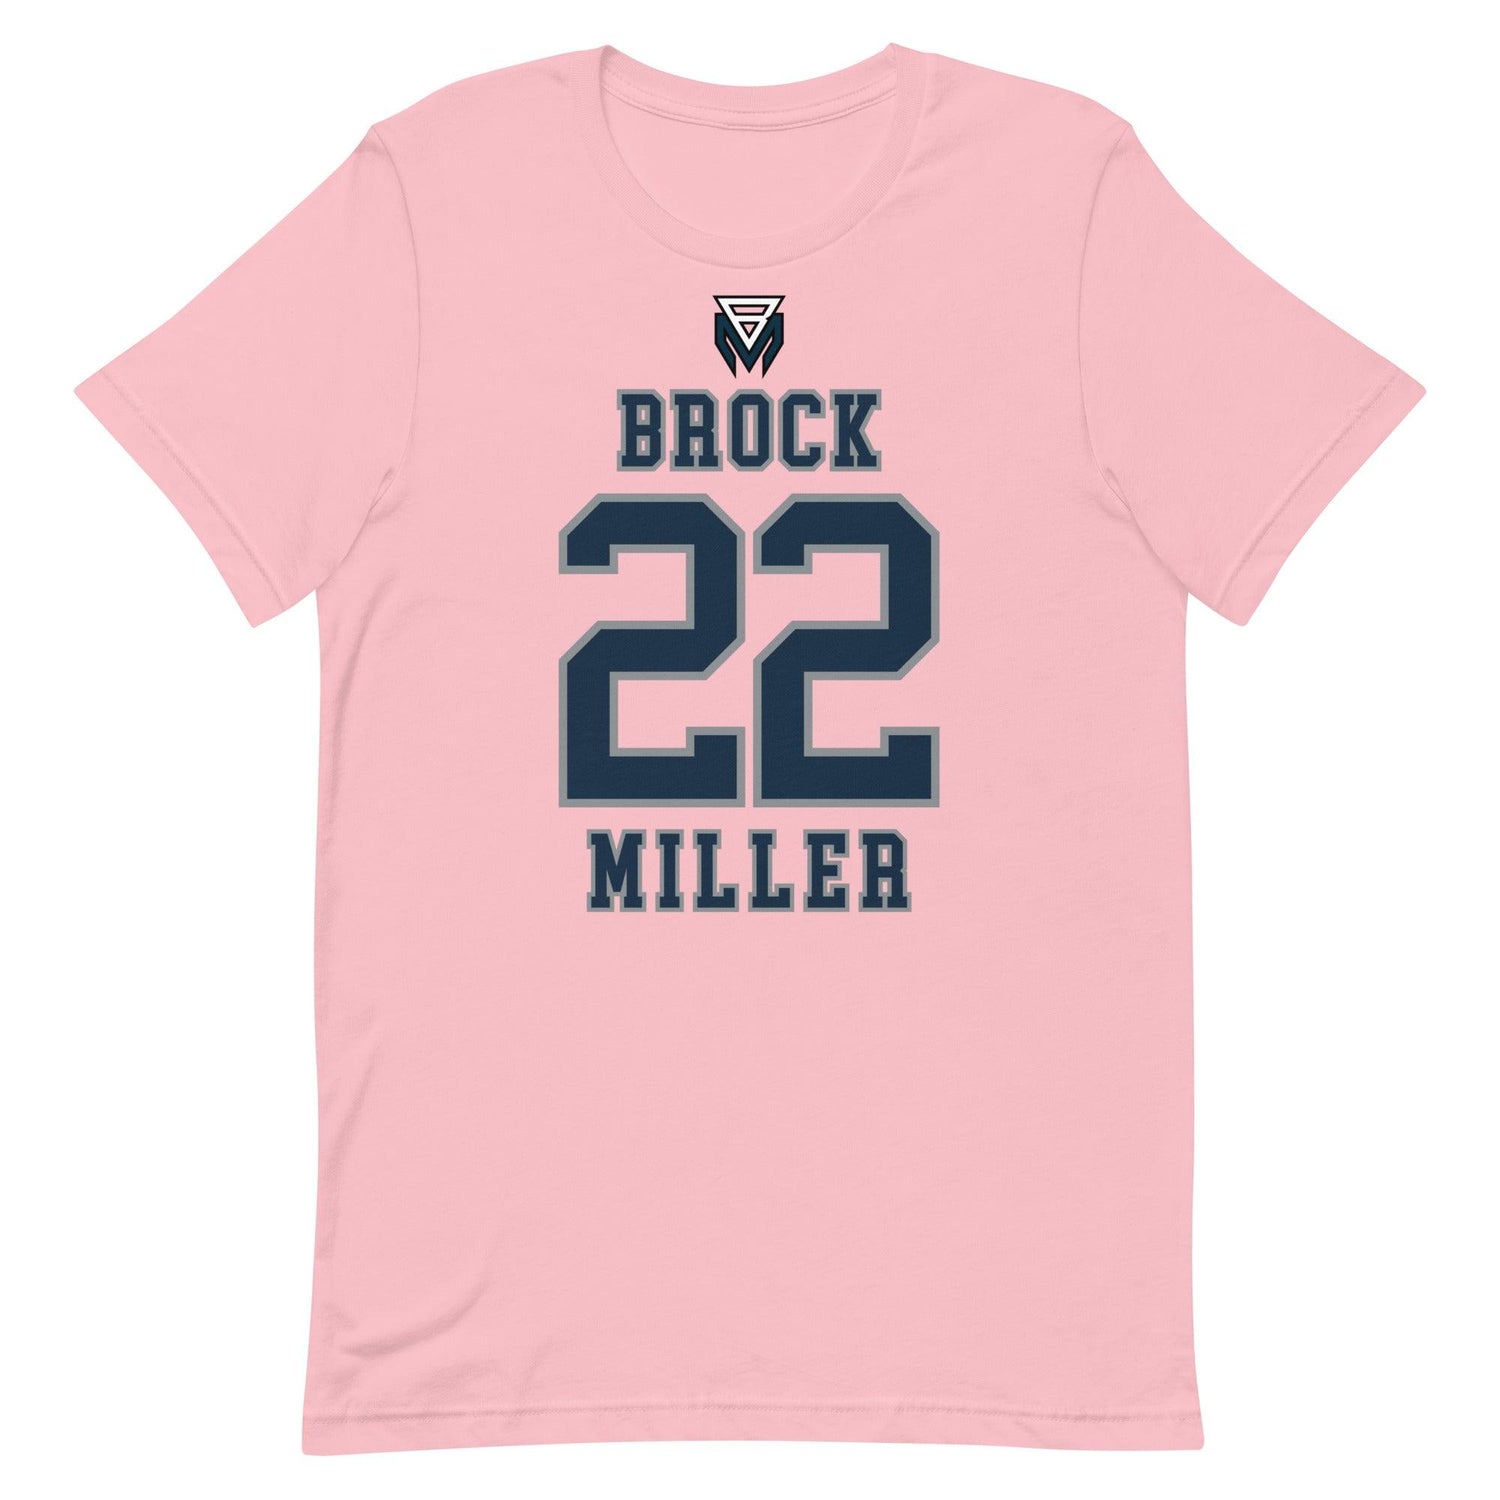 Brock Miller "Jersey" t-shirt - Fan Arch